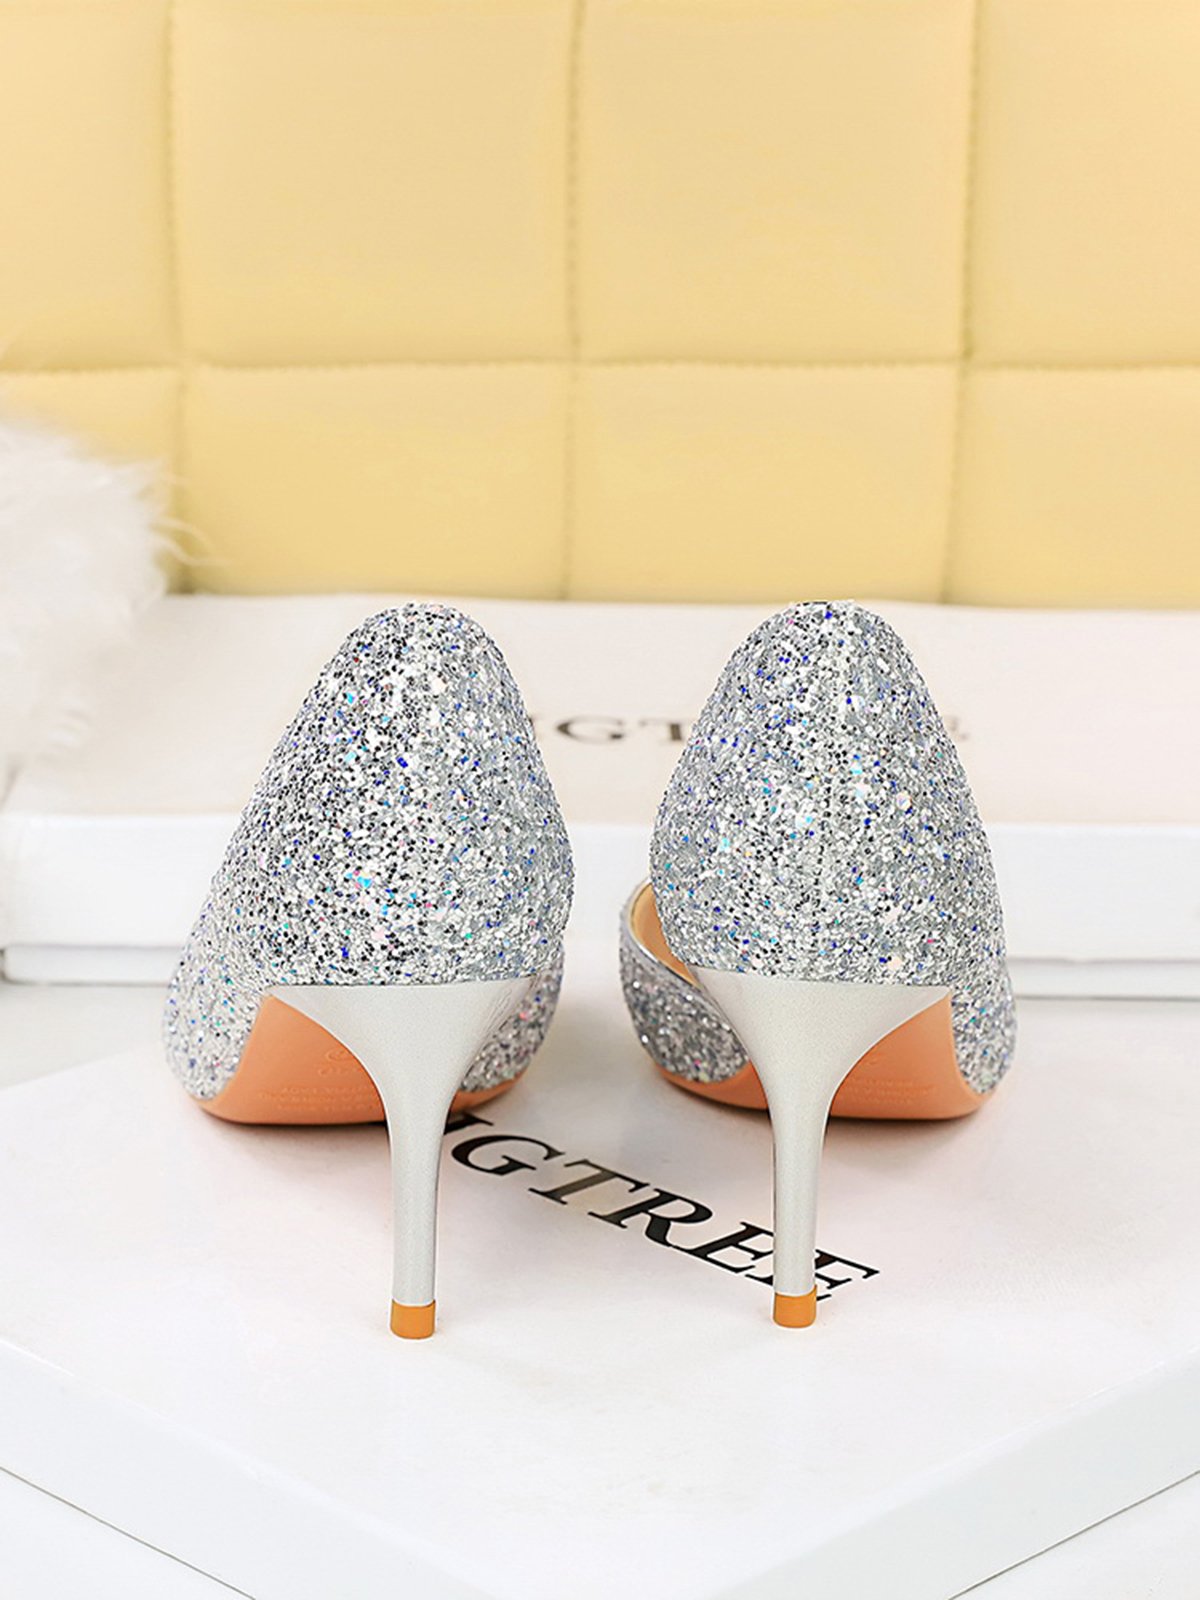 Sparkling Glitter Wedding Dress Stiletto Heel D'Orsay Pumps